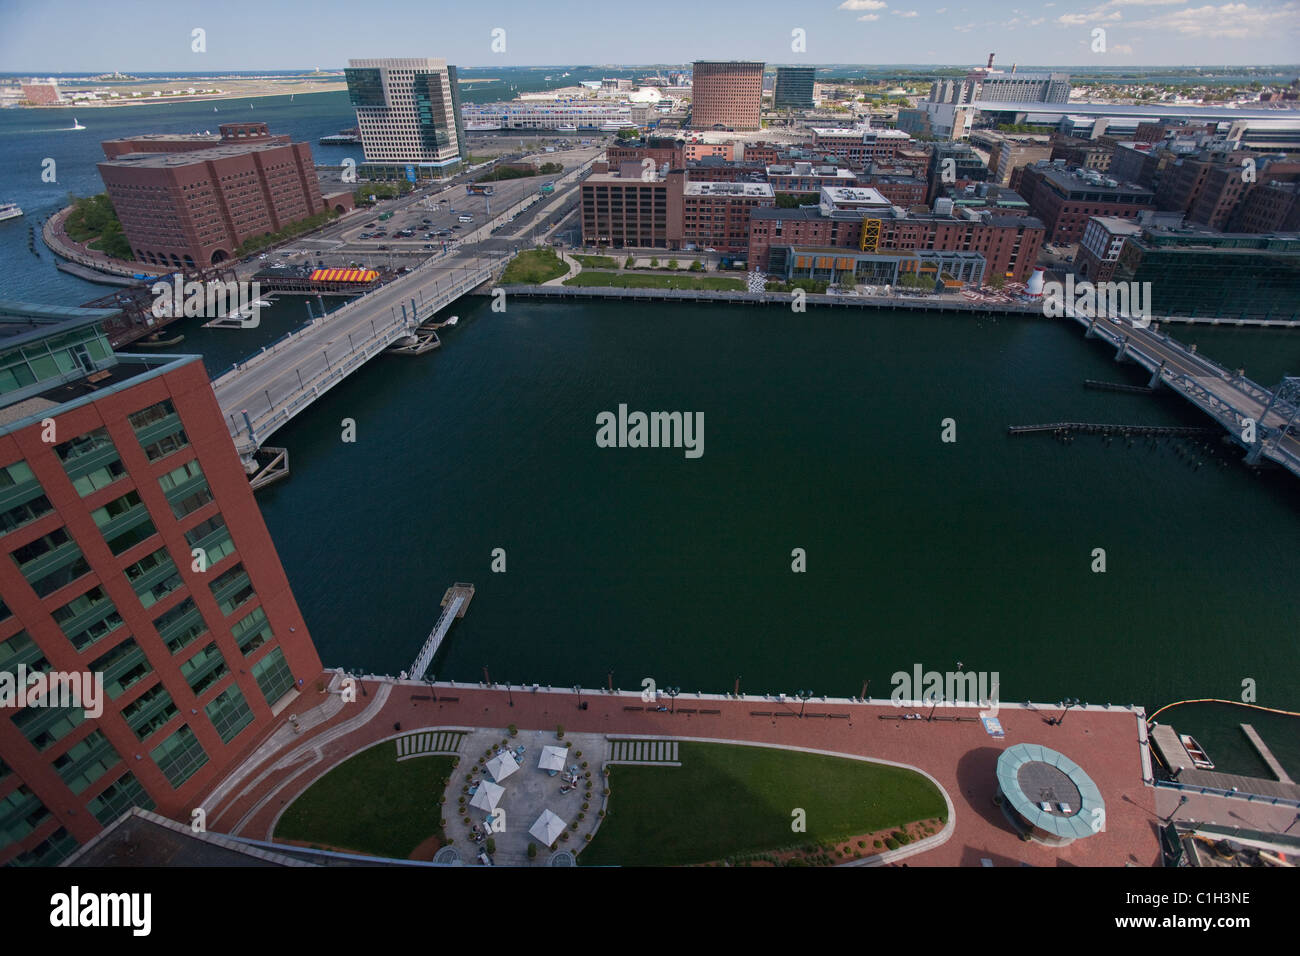 High angle view of a city, Boston, Massachusetts, USA Stock Photo